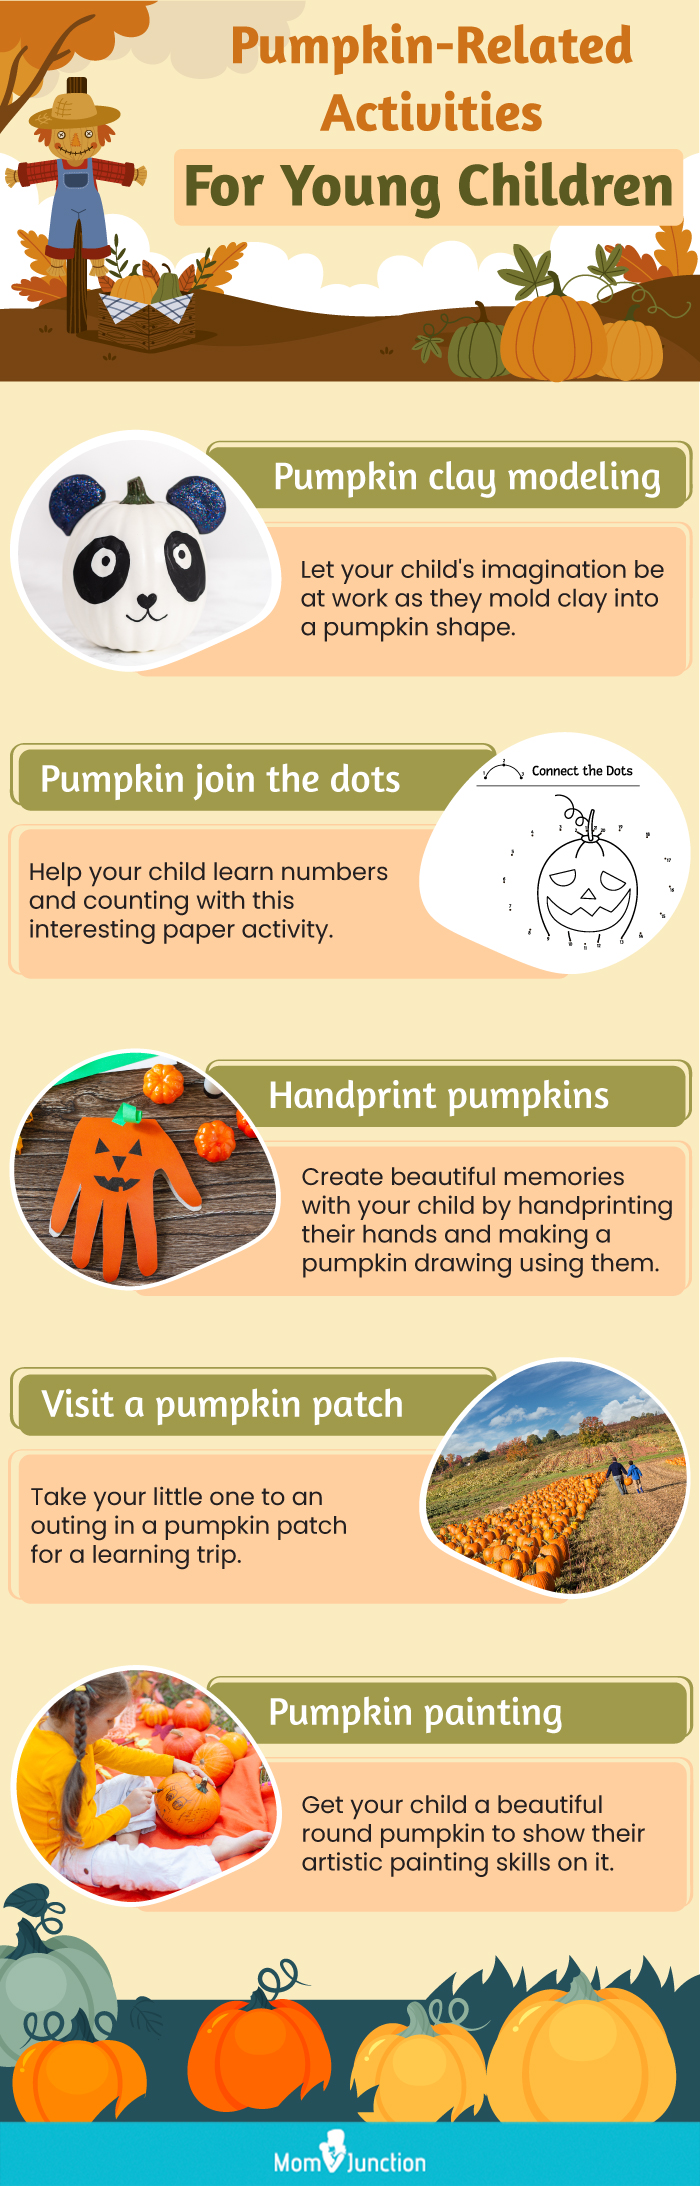 pumpkin related activities for young children (infographic)